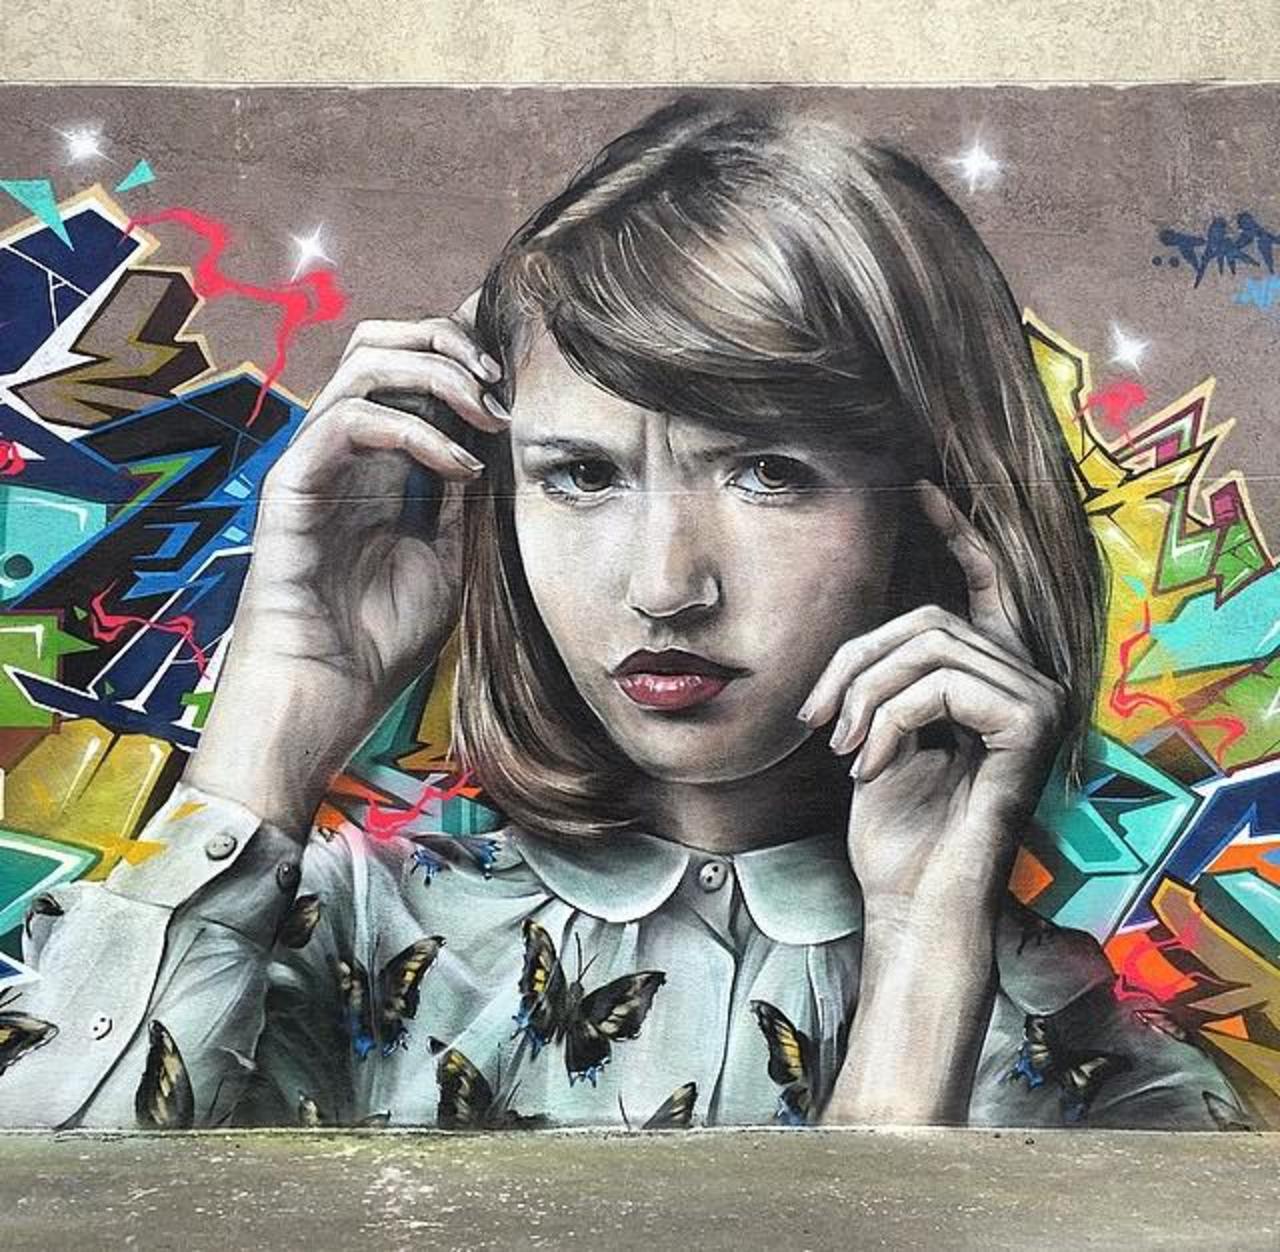 “@GoogleStreetArt: Fantastic Street Art portrait by Mantra & Takt 

#art #arte #graffiti #streetart http://t.co/RRvXxGvnpE”#thatface